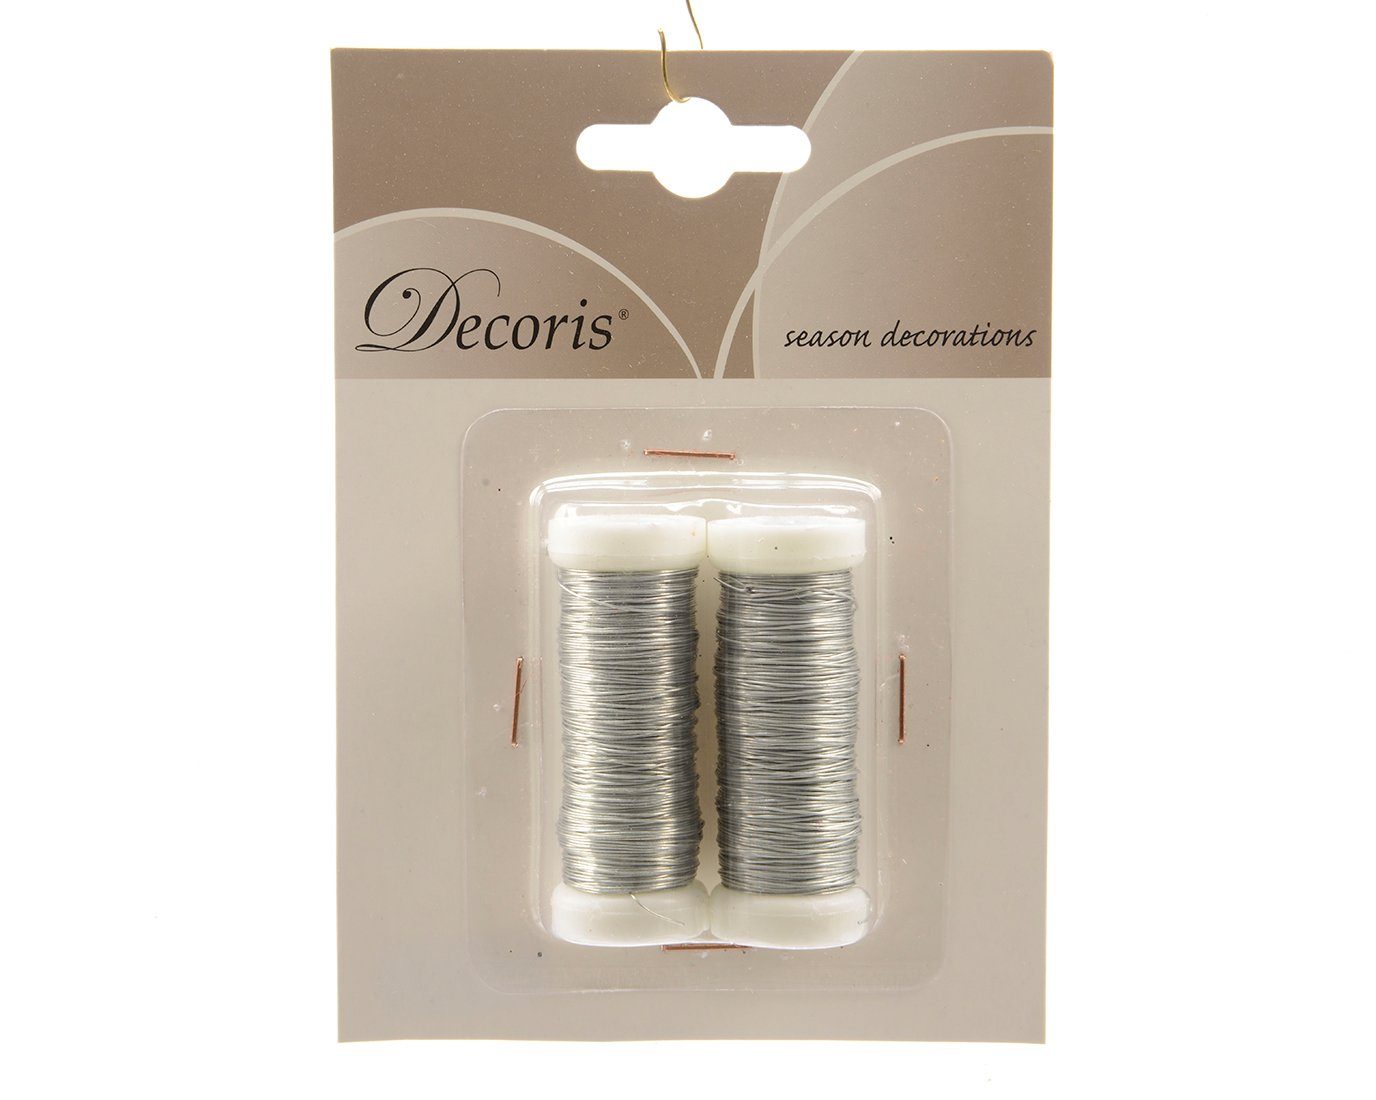 Decoris season decorations Draht, Basteldraht 0,3mm Eisen lackiert 30m 2er Set Silber